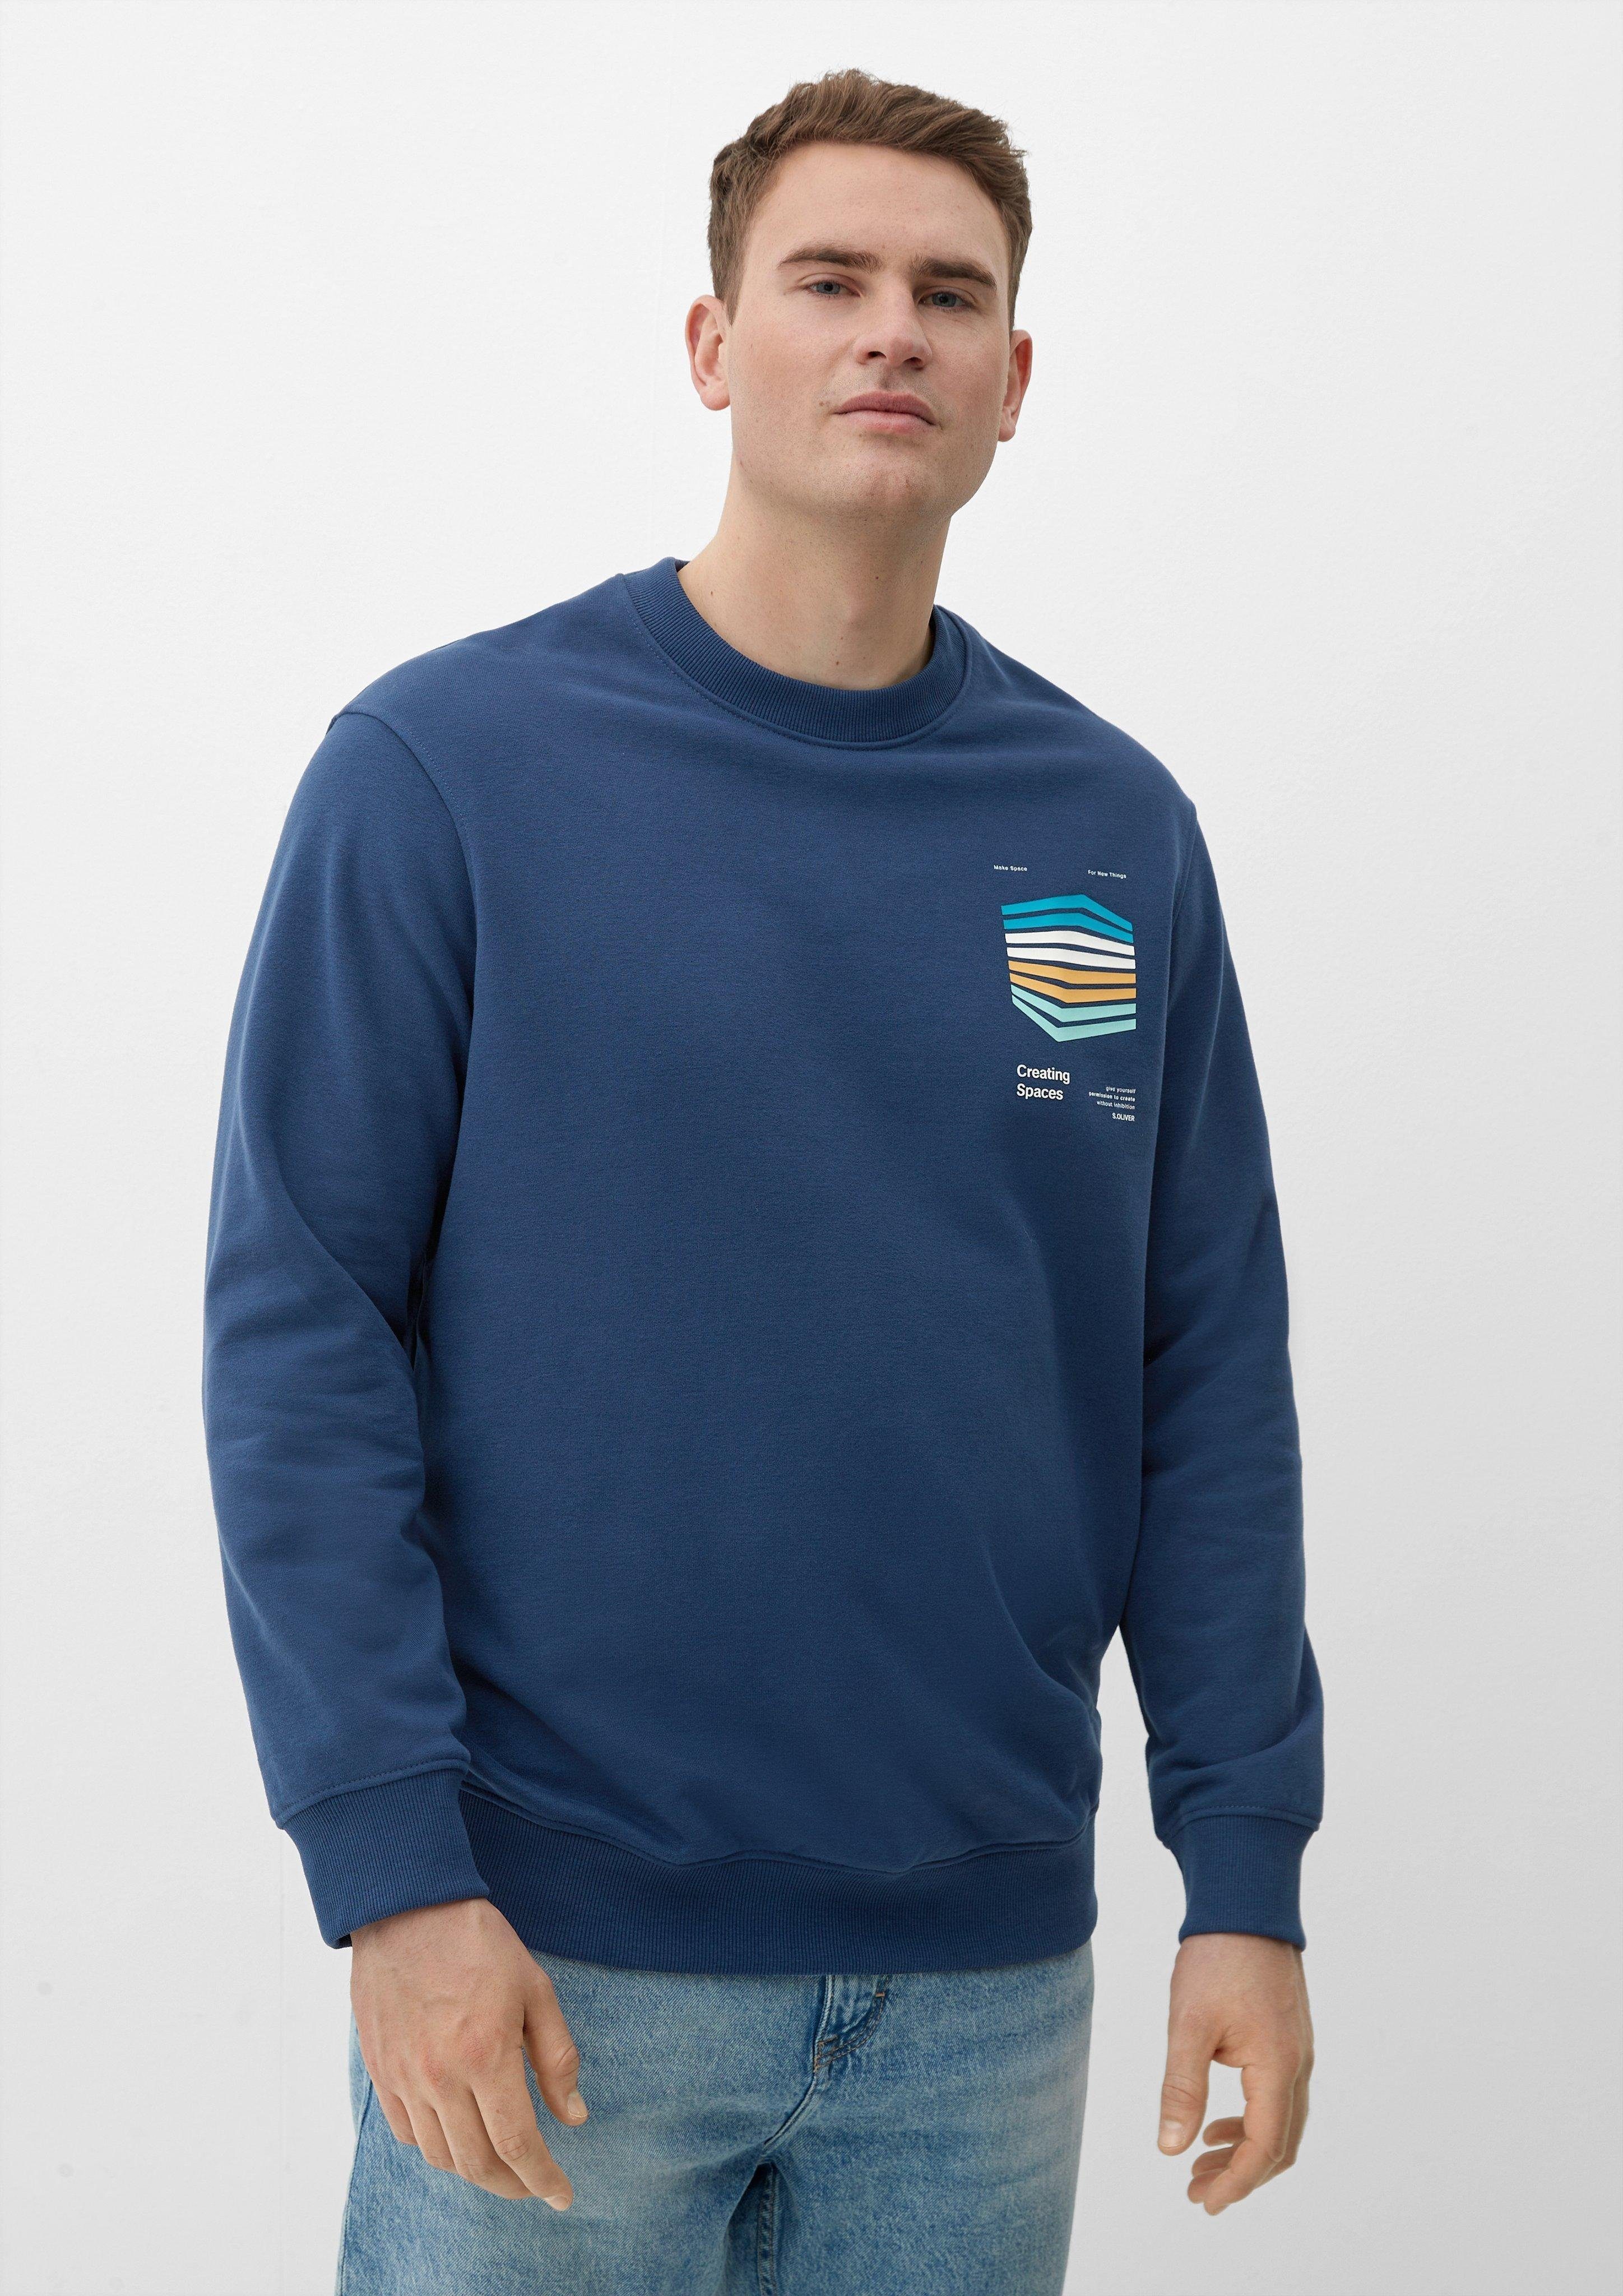 s.Oliver Sweatshirt Sweatshirt mit Frontprint tiefblau